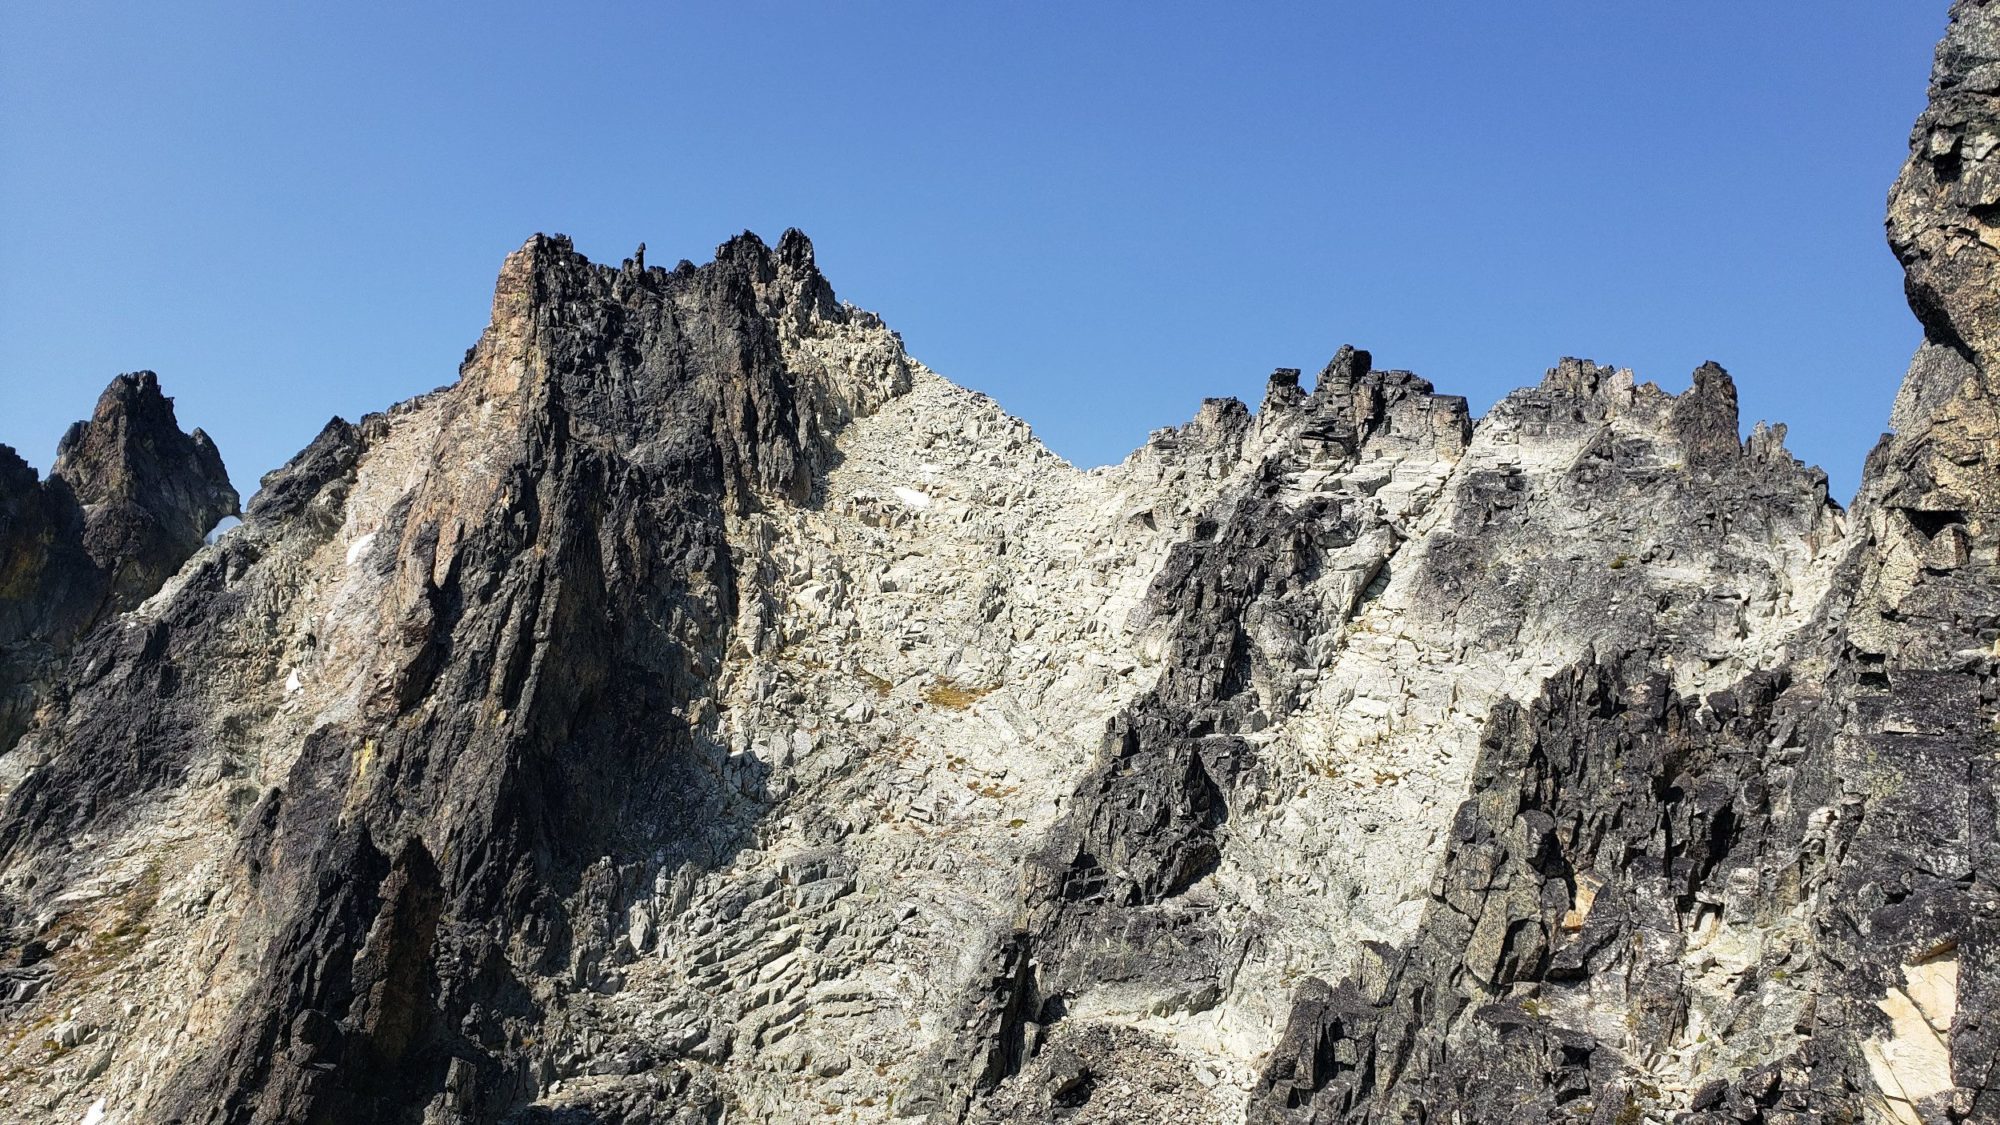 katsuk peak from saddle above camp site north cascades